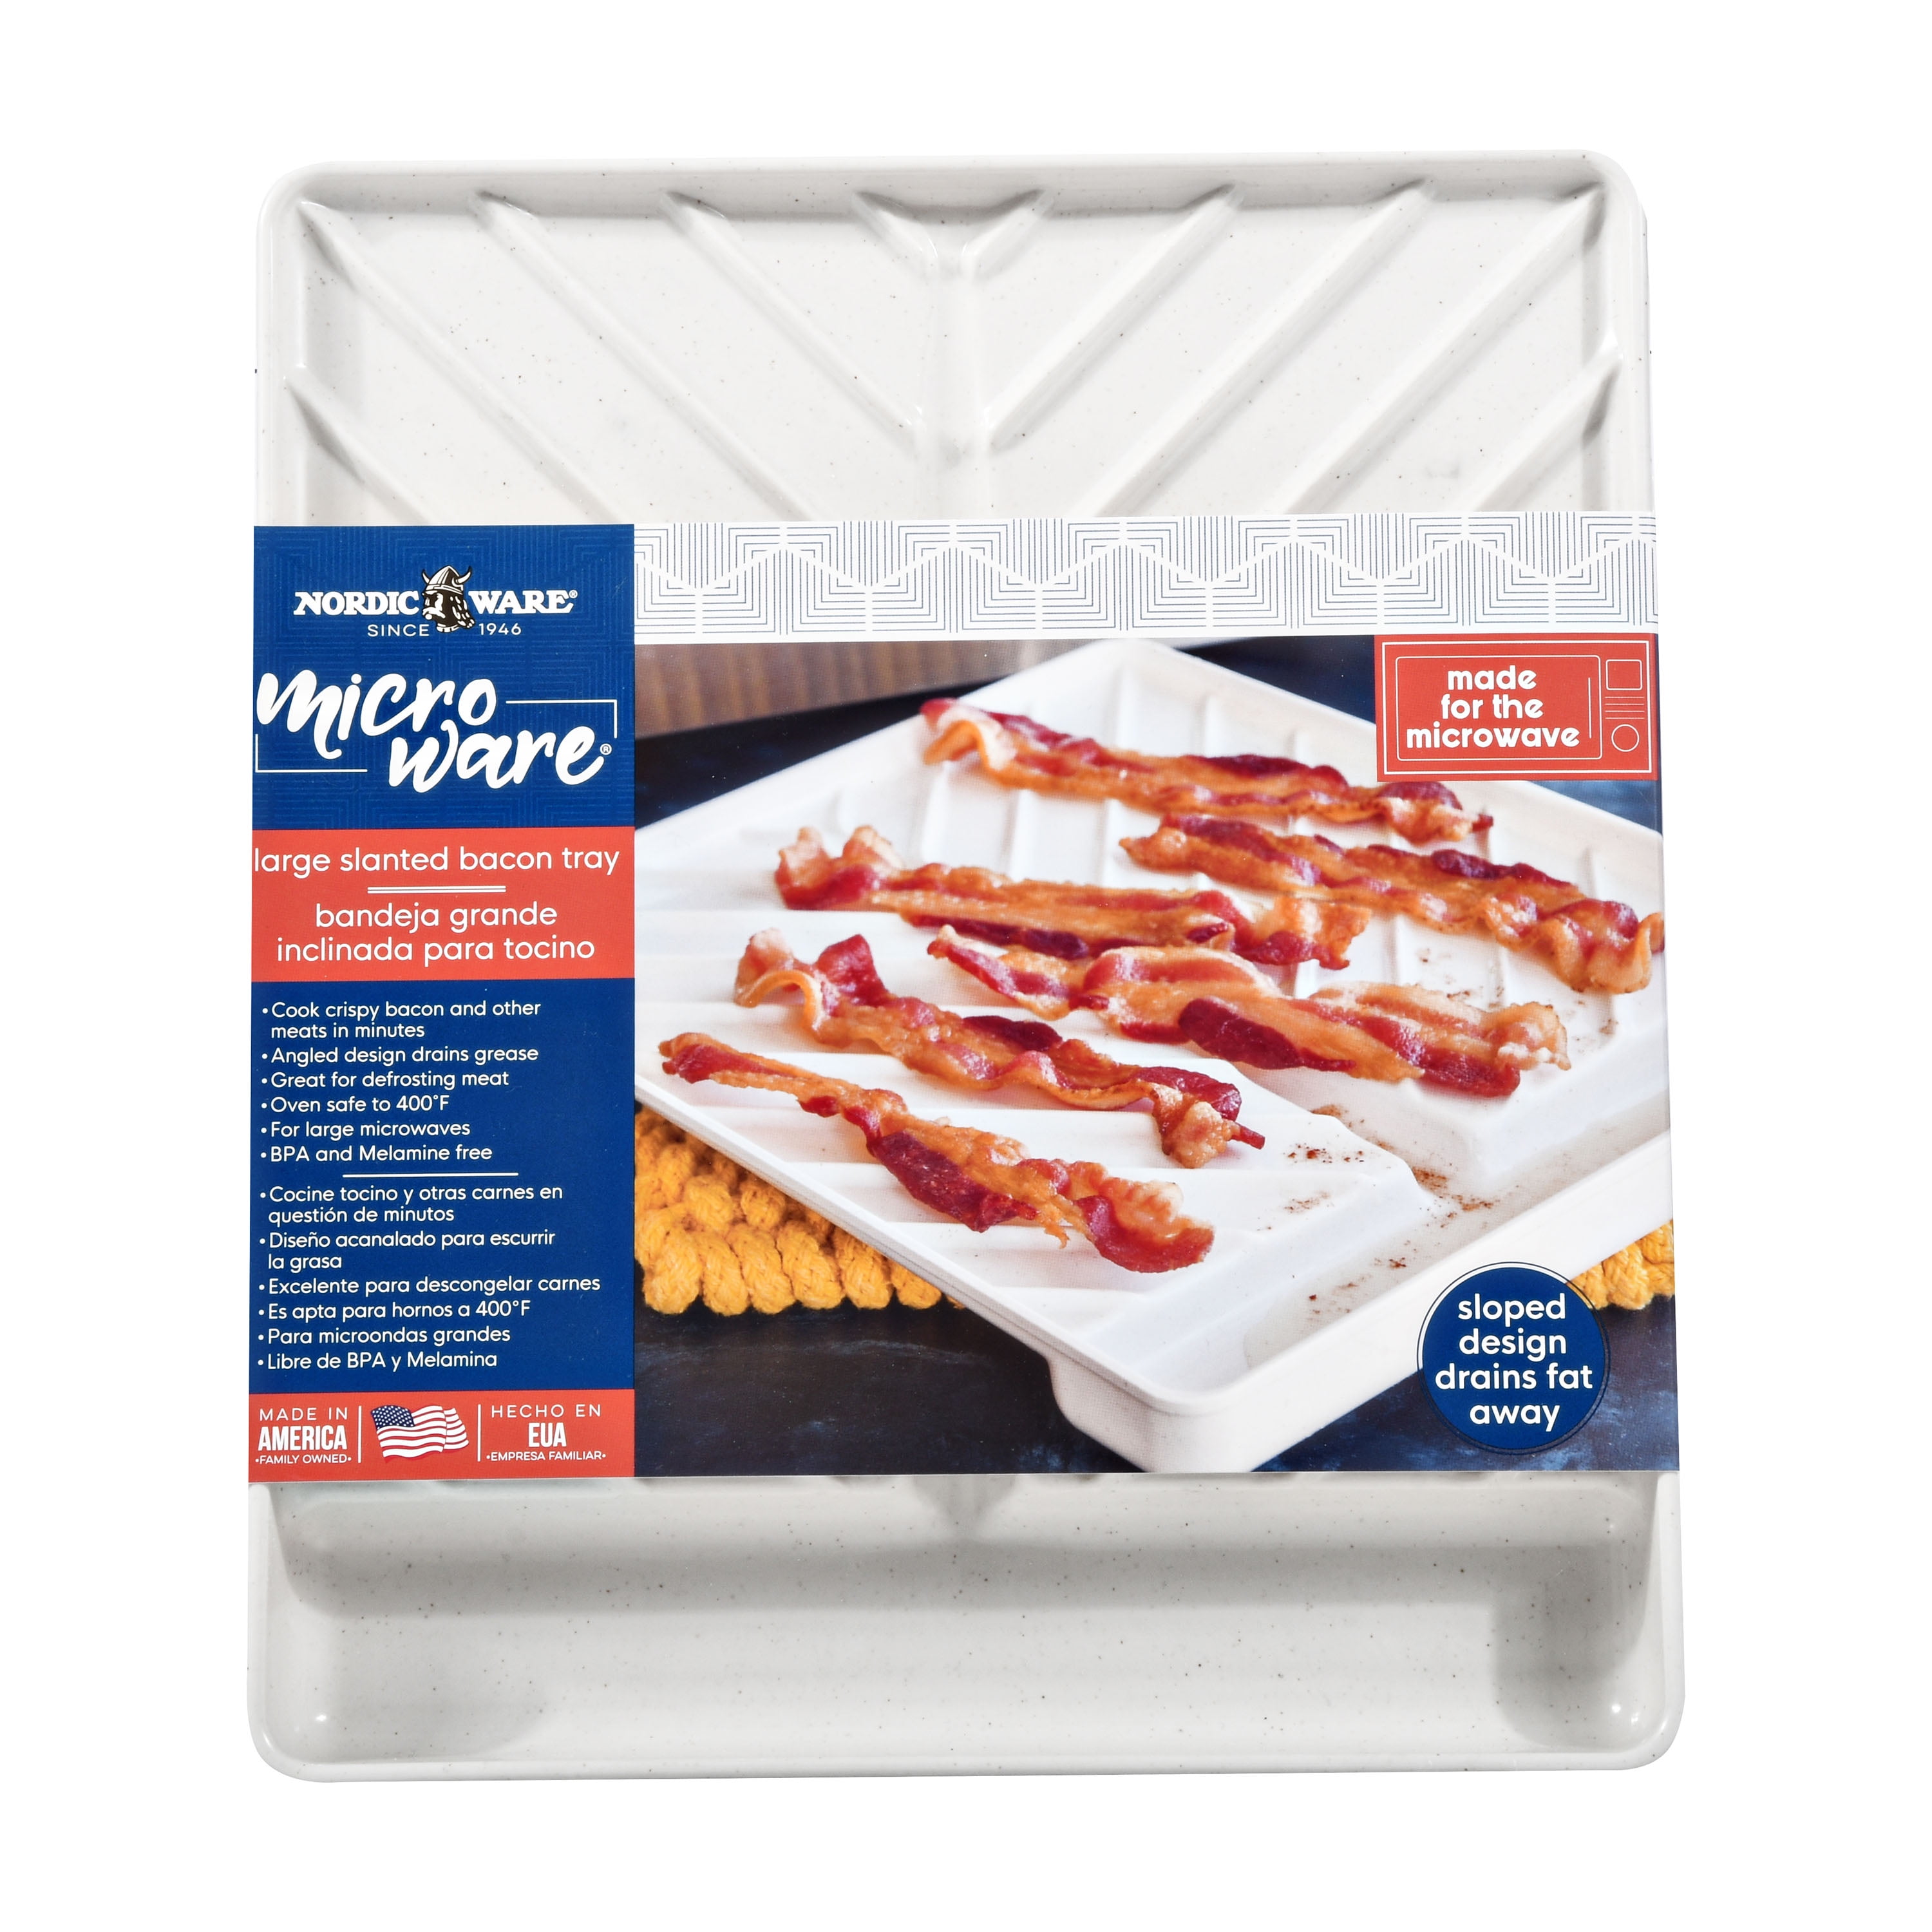 Nordic Ware Microware Bacon Rack, Compact